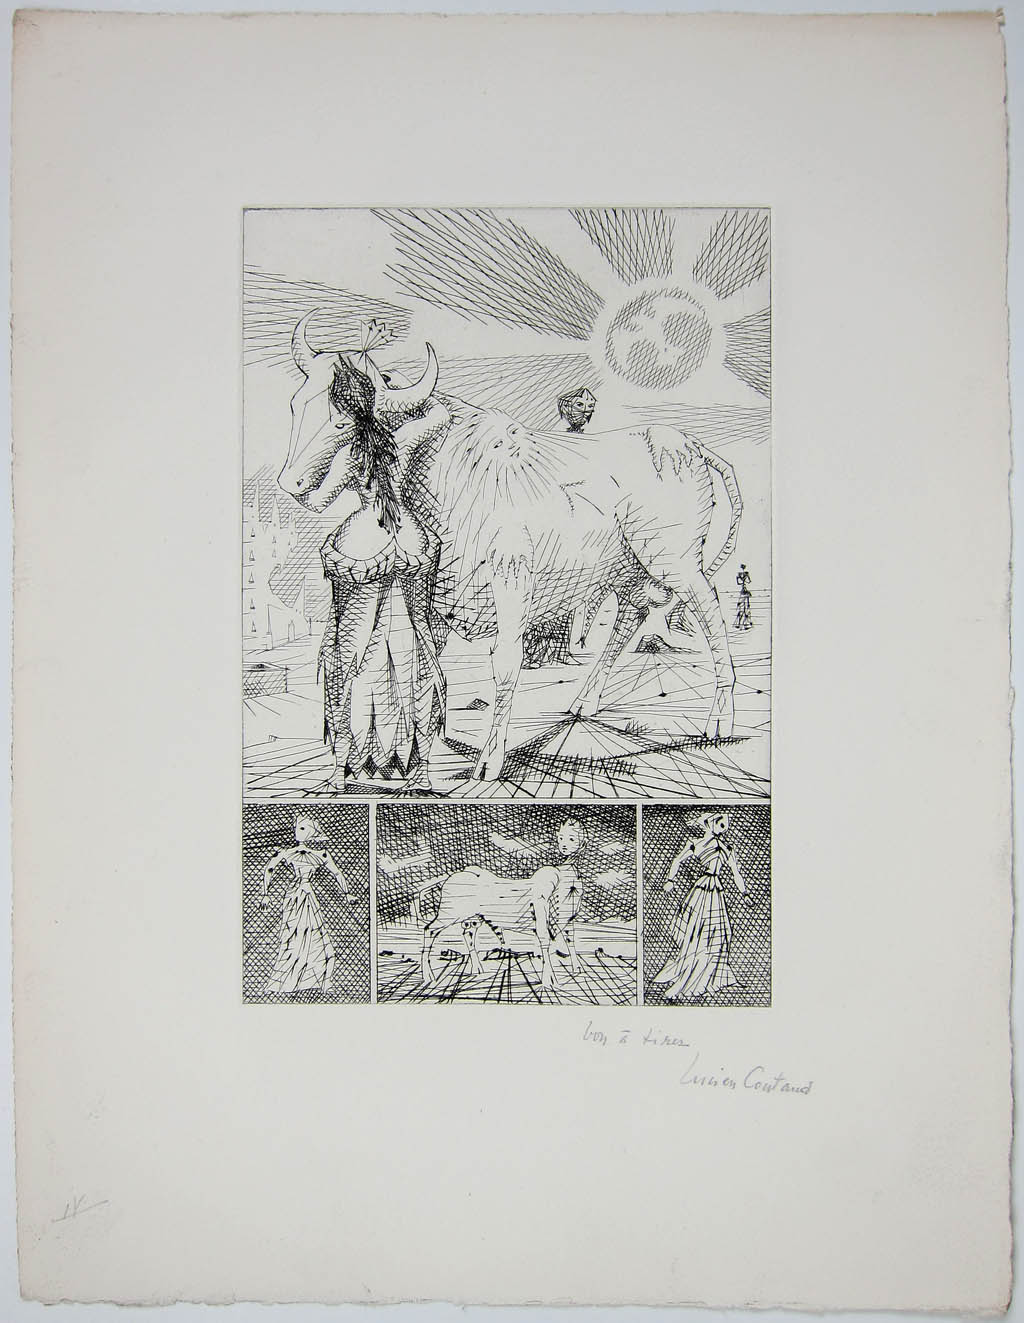 Lucien Coutaud - Le Taureau Blanc - plate III (bon a tirer) - 1956 etching